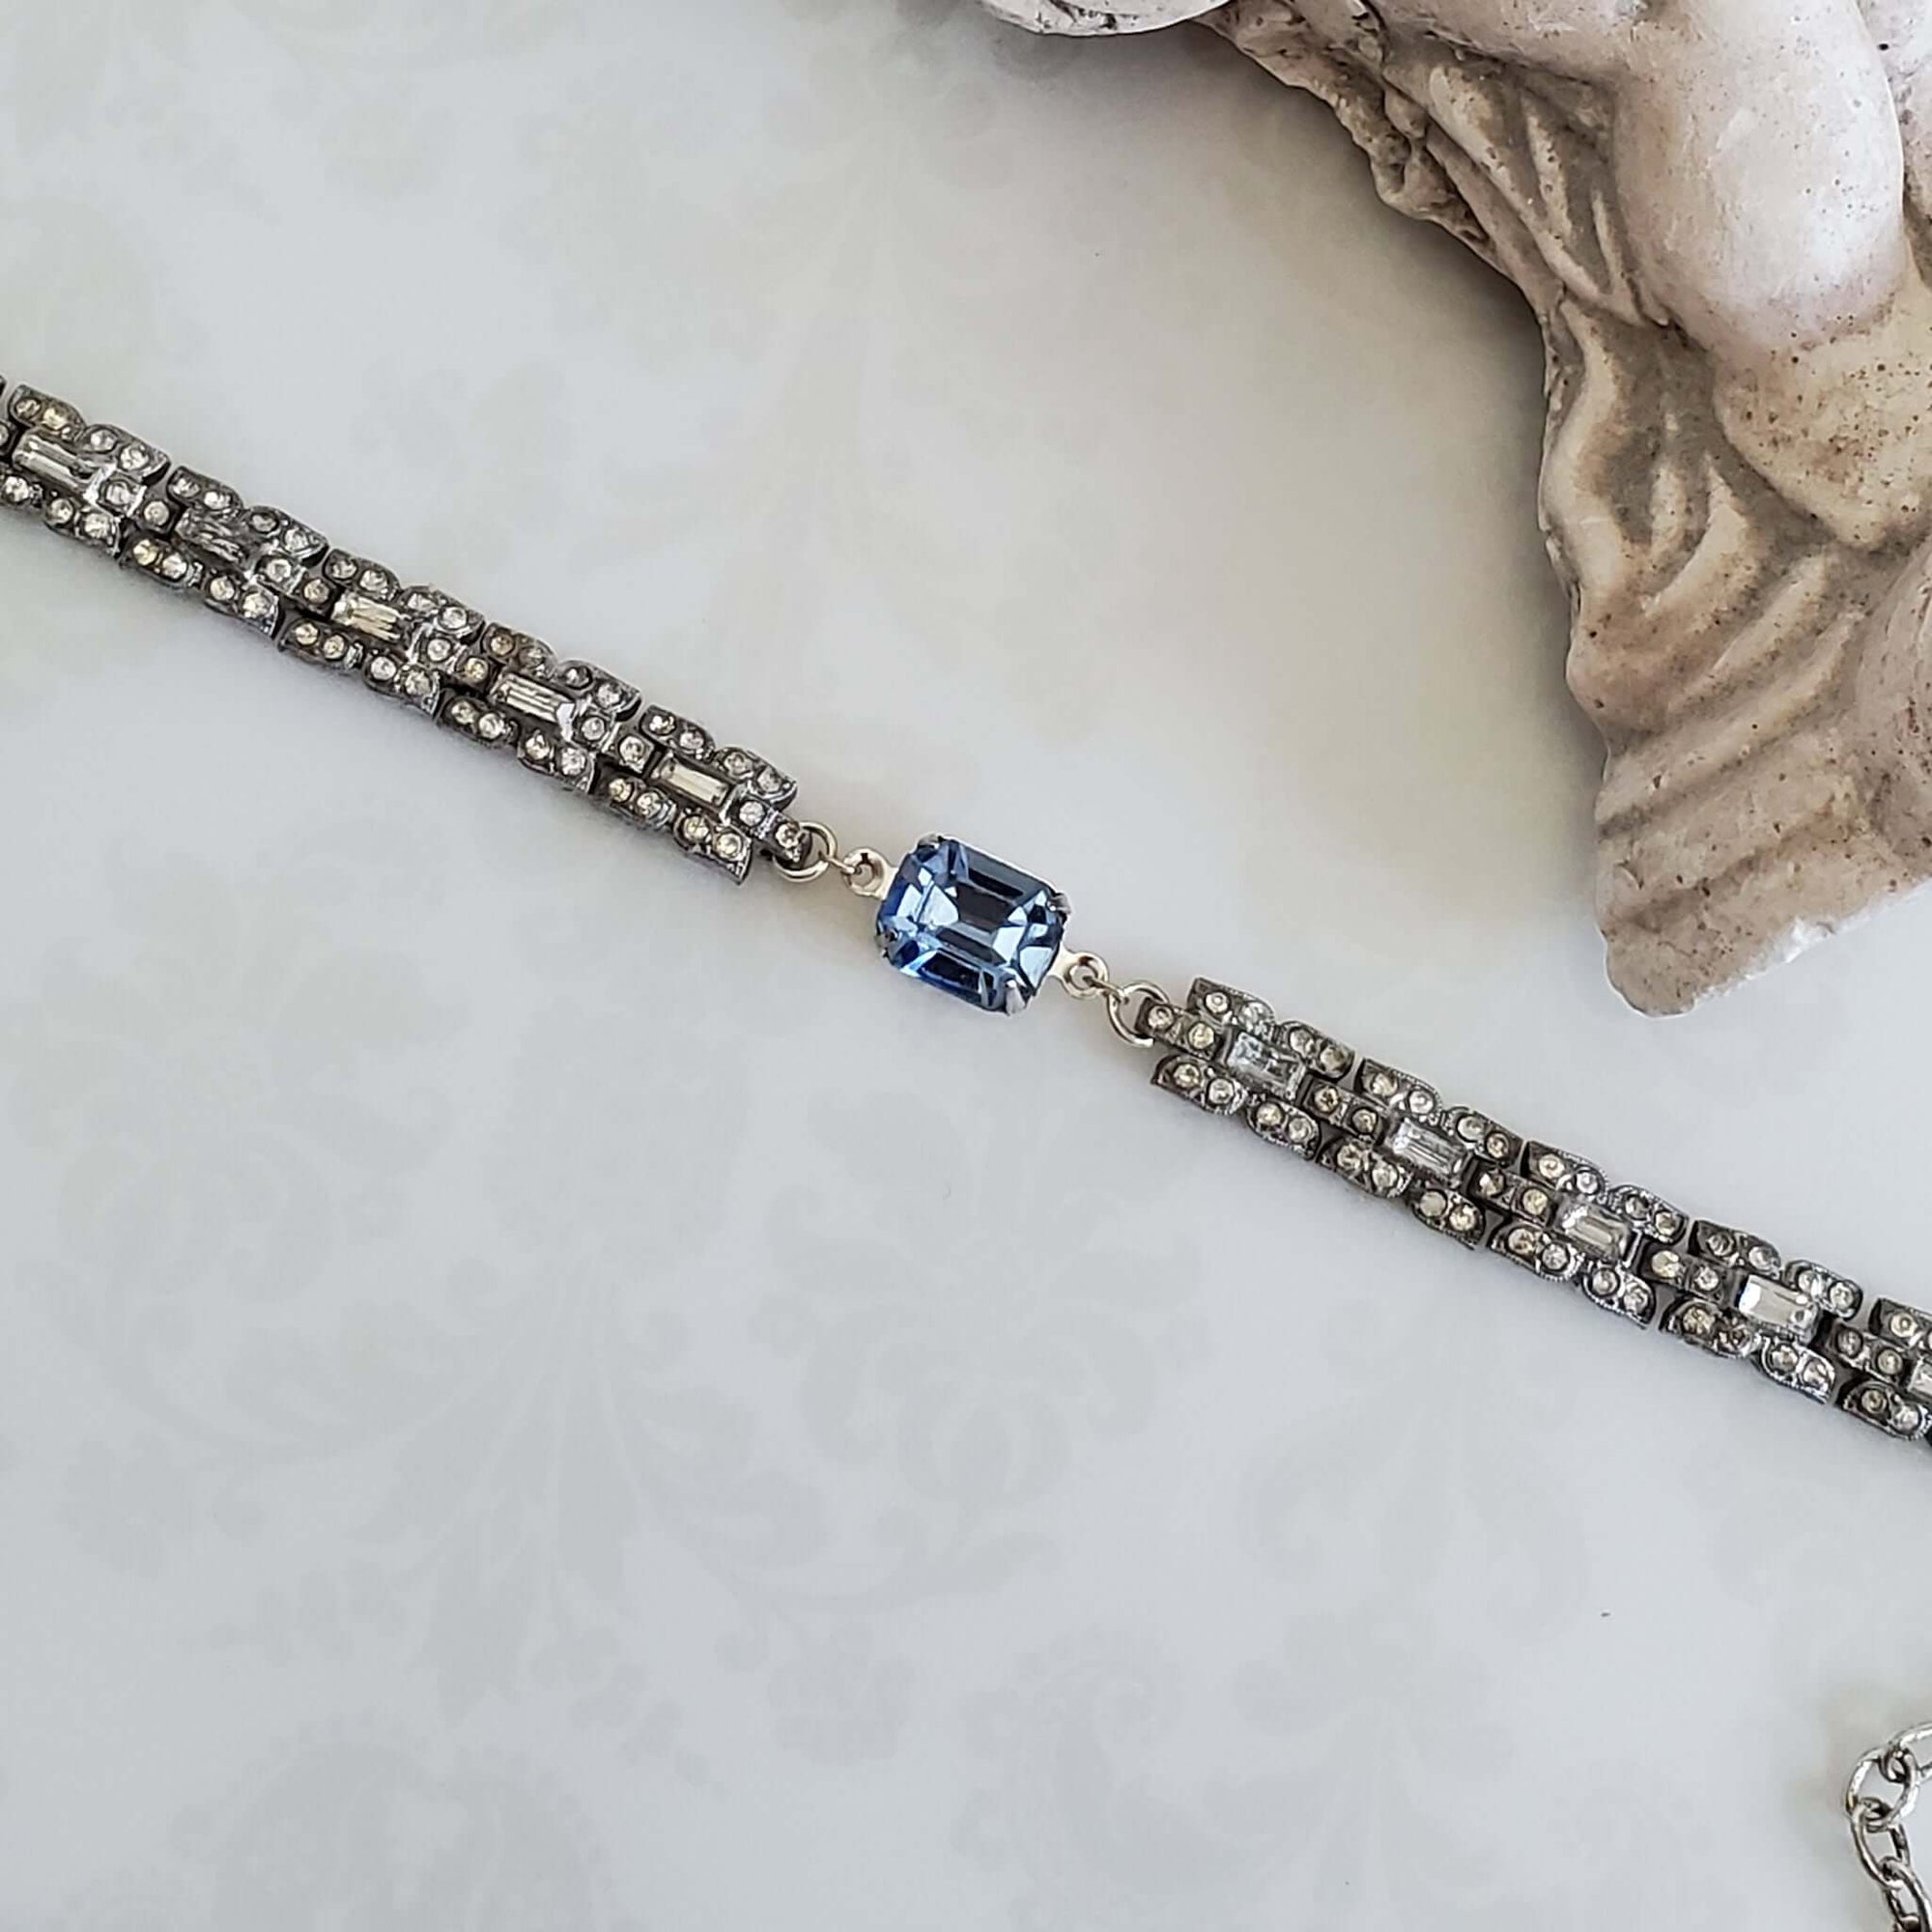 Dainty Rhinestone Bridal Bracelet with a Blue Stone Accent